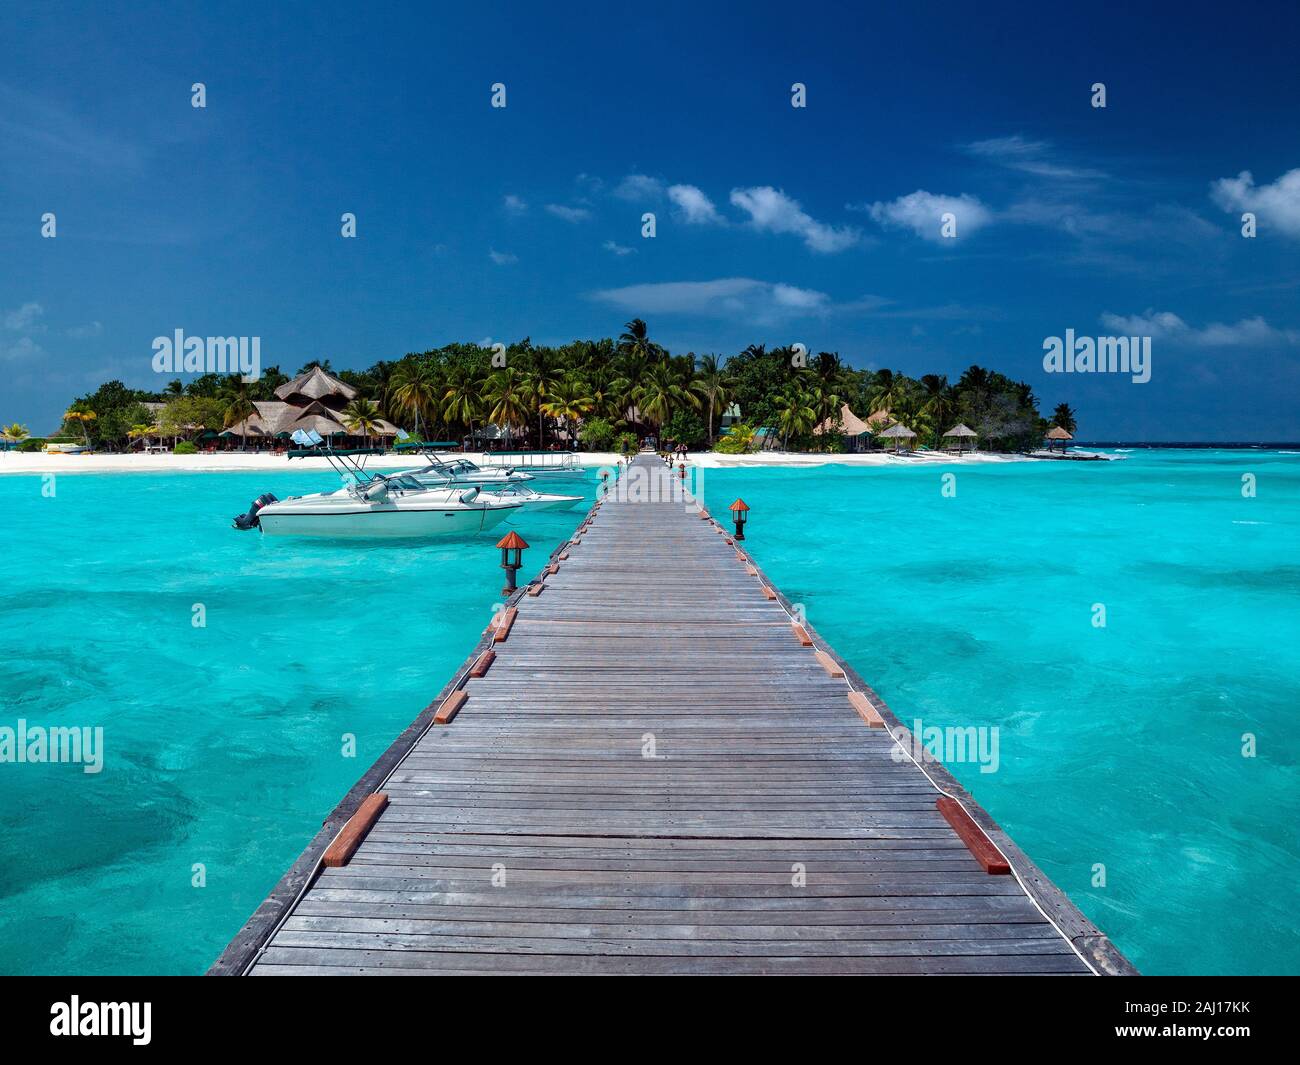 Maldives. 02.11.05. Luxury vacation resort on an idyllic tropical island paradise in the Maldives - Indian Ocean Stock Photo